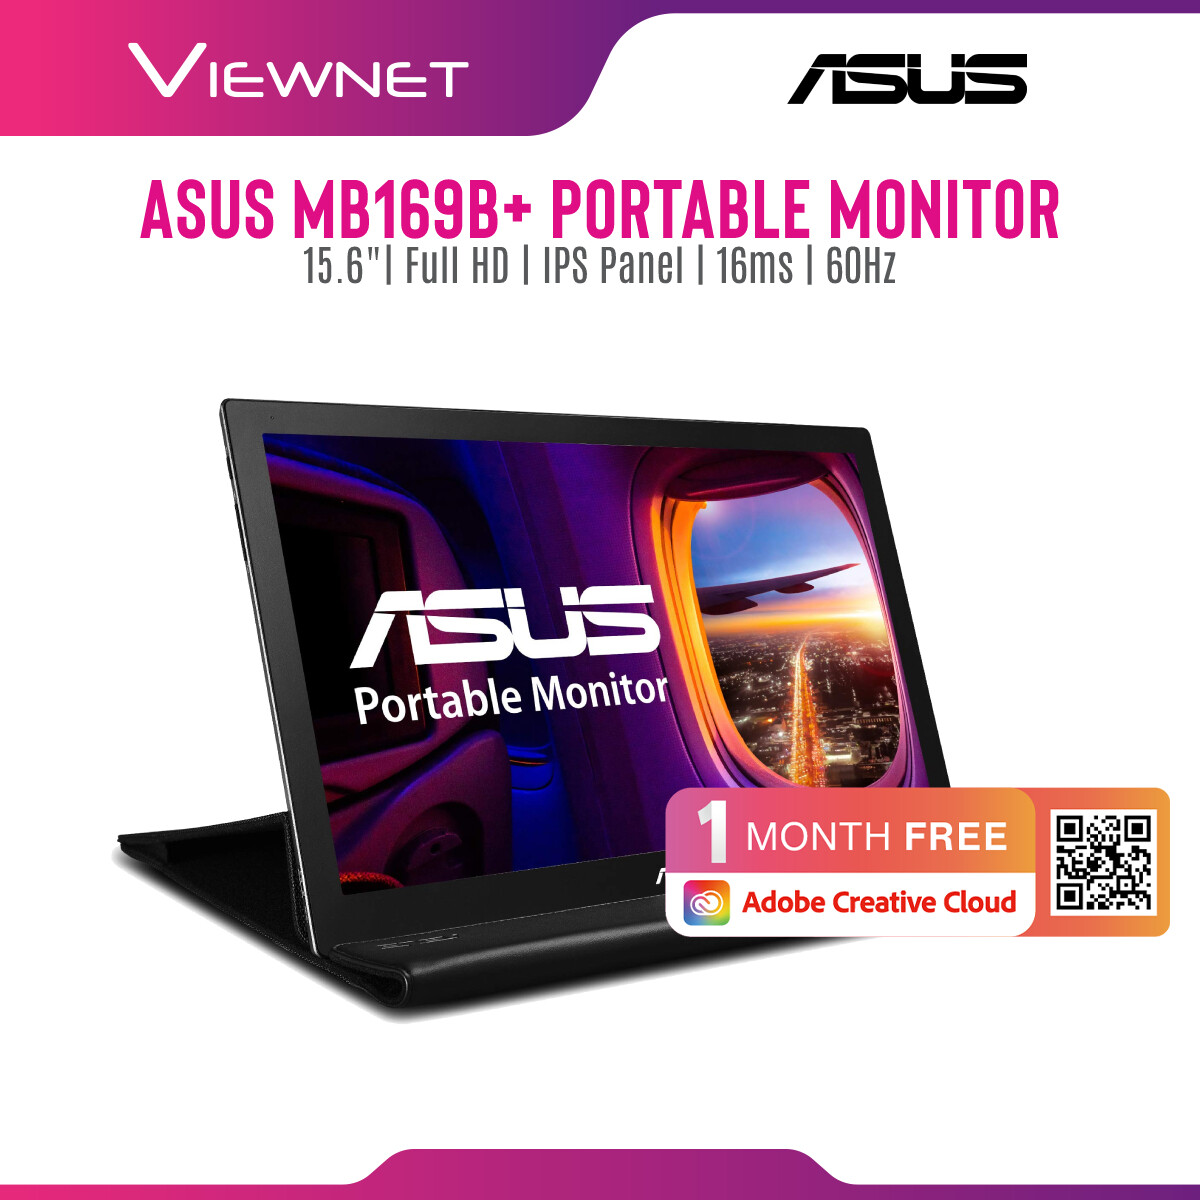 Asus MB169B+ Portable USB Monitor - 15.6 inch, Full HD, USB-powered, IPS, Ultra-slim, Smart Case